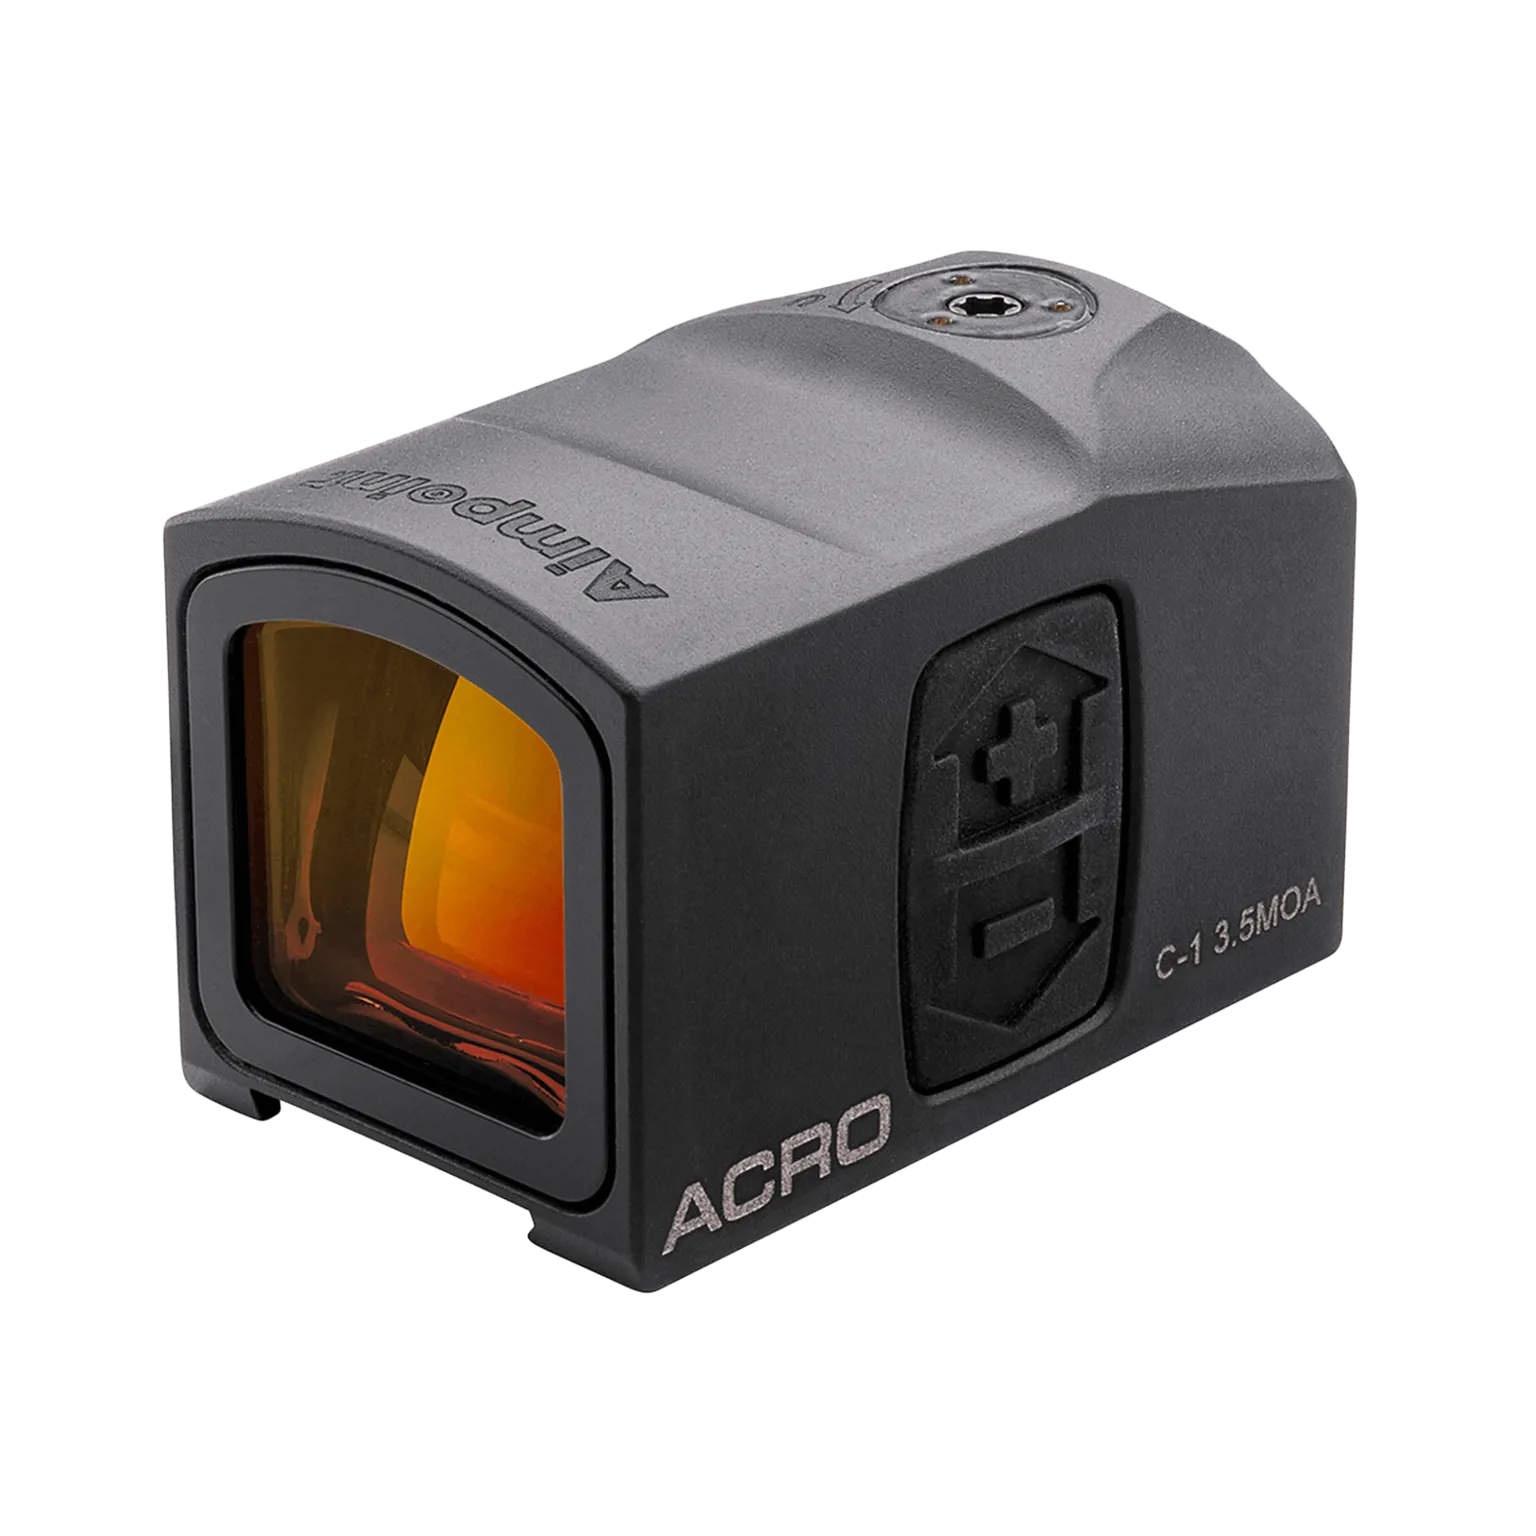 Acro C-1™ 3.5 MOA - Mirino a punto rosso con interfaccia Acro™ integrata - 1